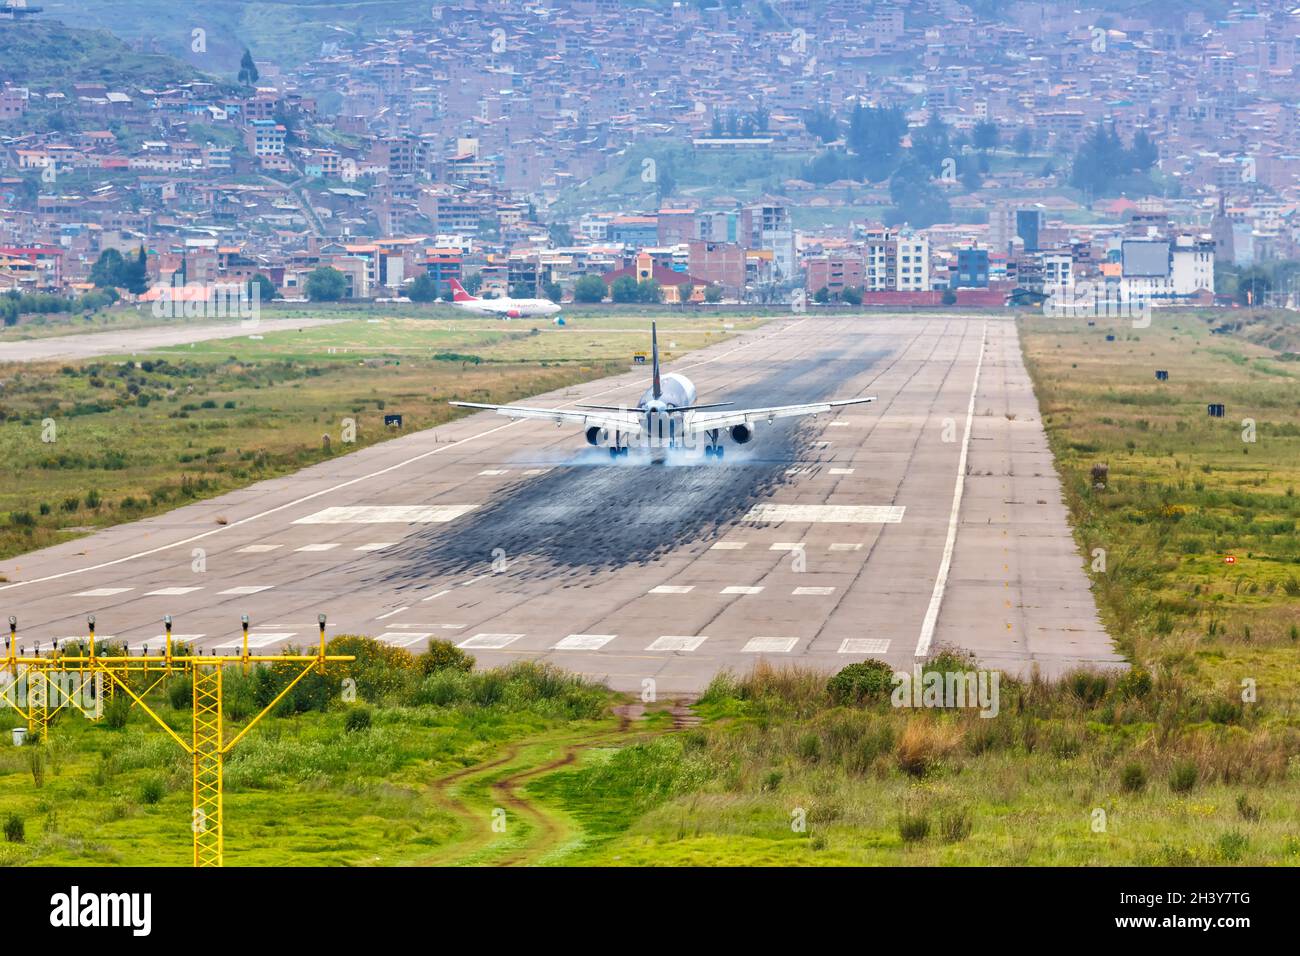 LAN Airbus Aircraft Cusco Airport in Peru Stock Photo